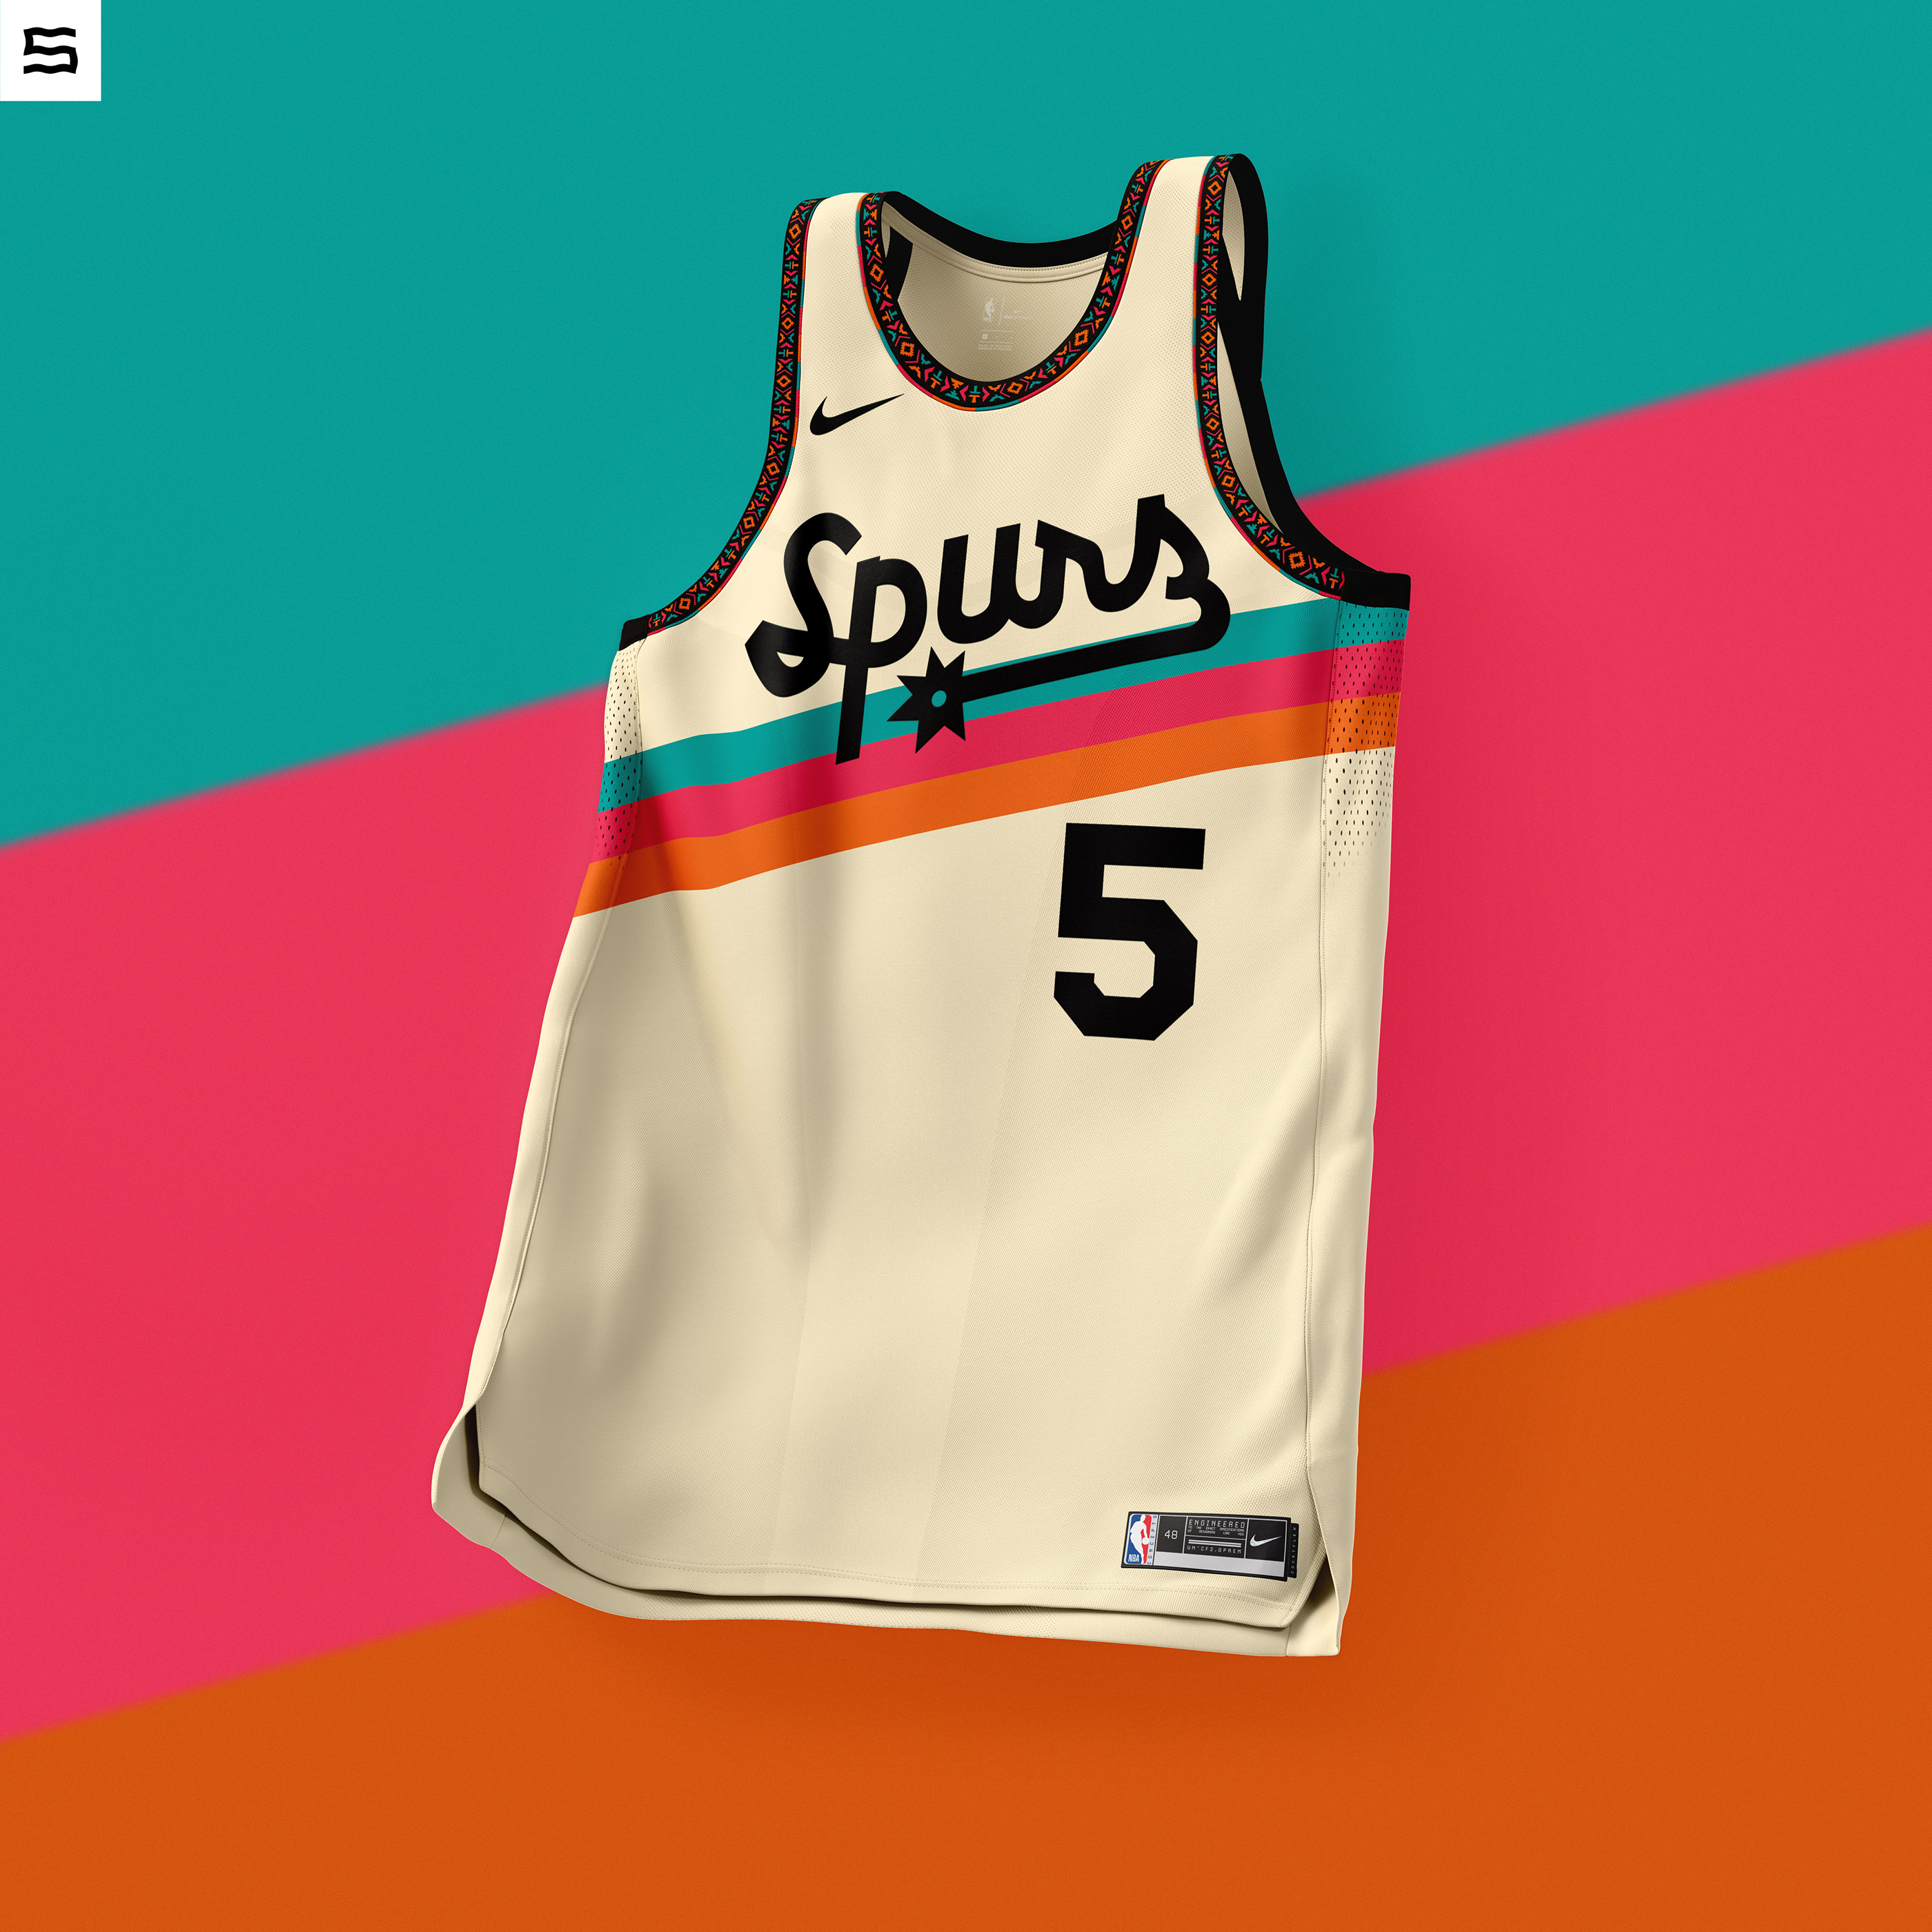 NBA Uniform Concepts on Behance